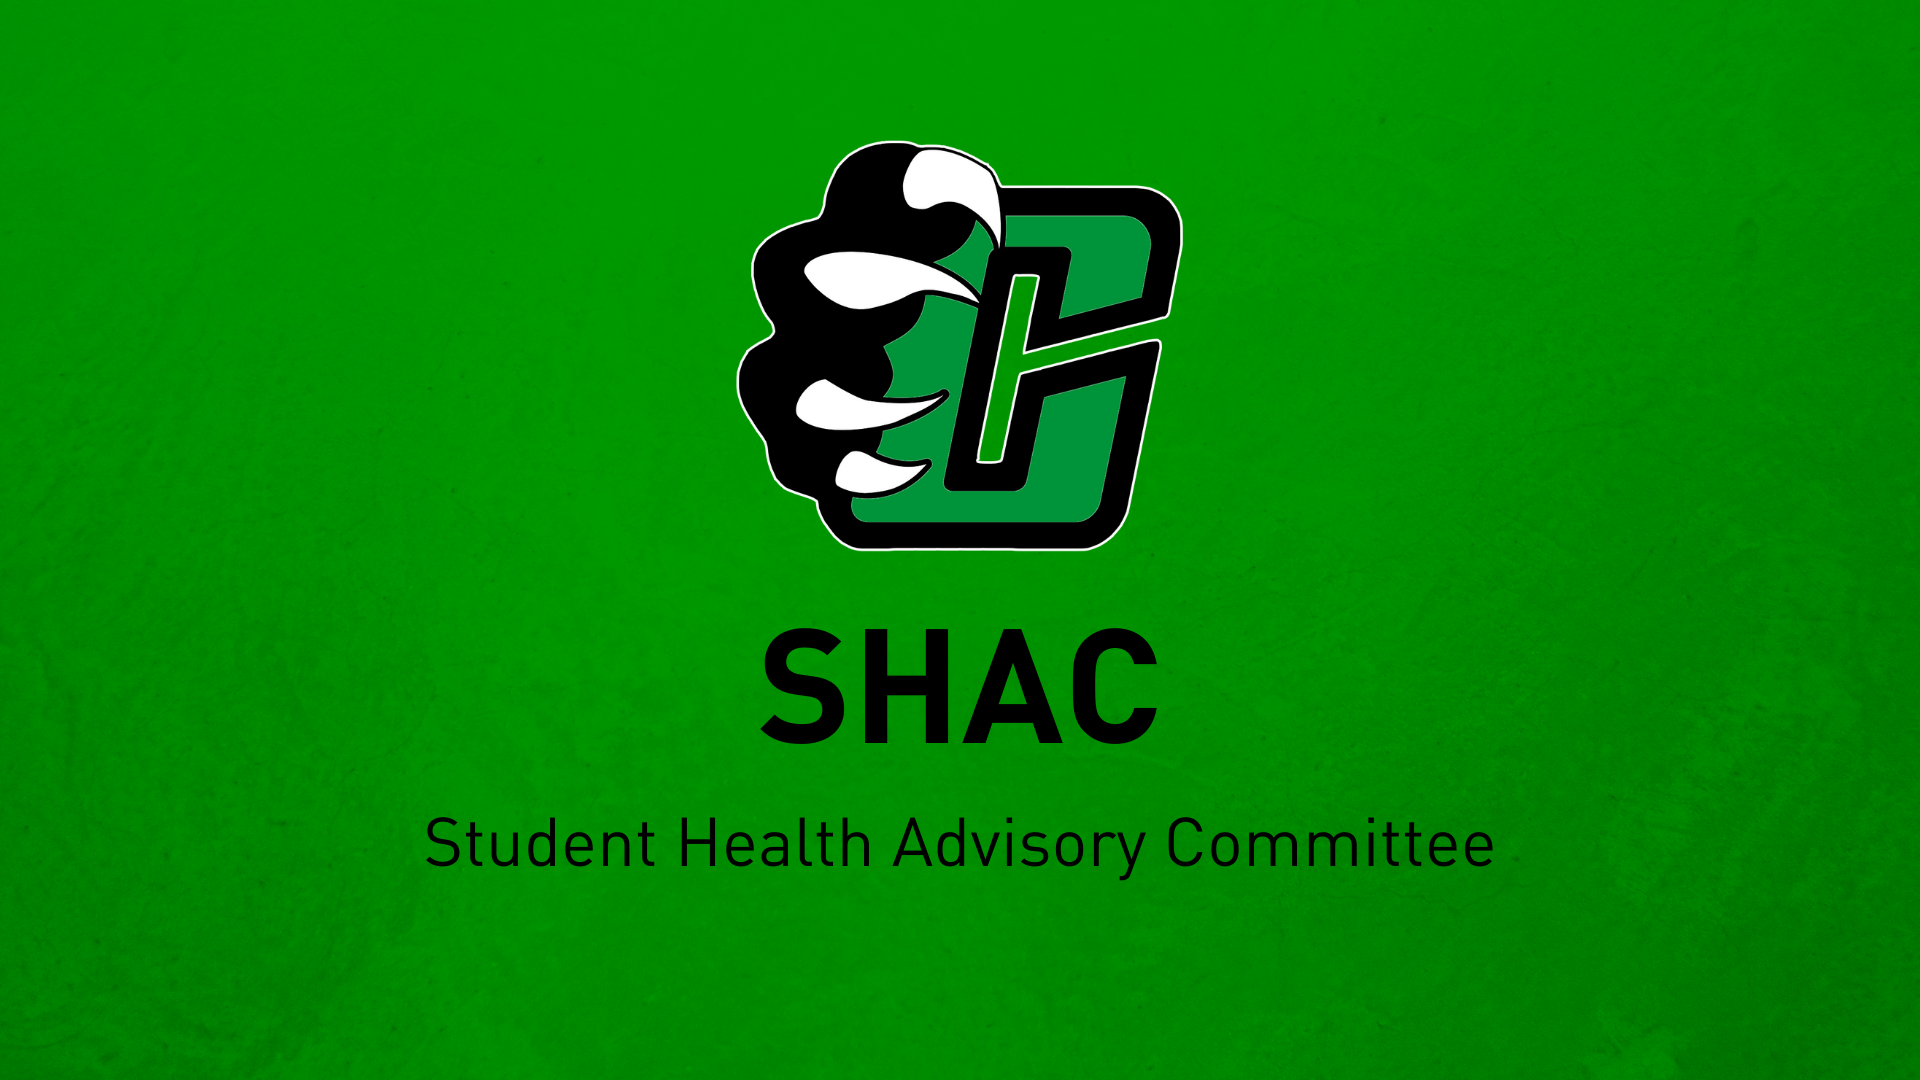 Student Health Advisory Committee